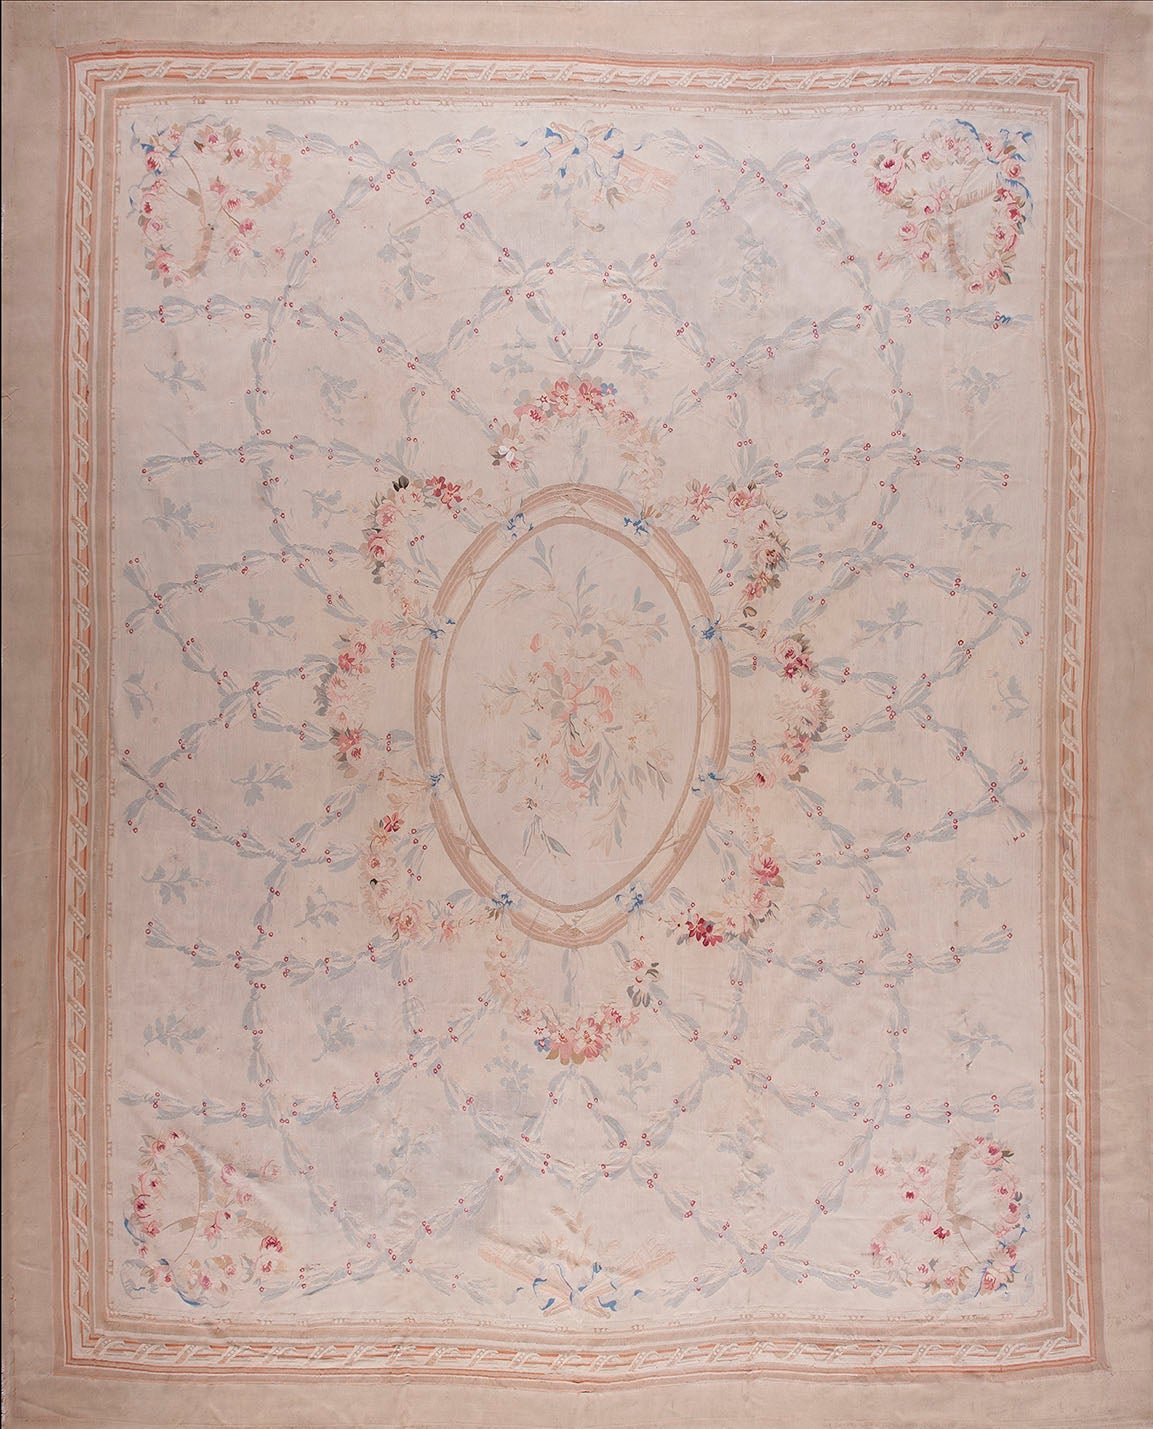 Late 19th Century French Aubusson Carpet ( 11'8" x 14'3" - 355 x 434 cm )  